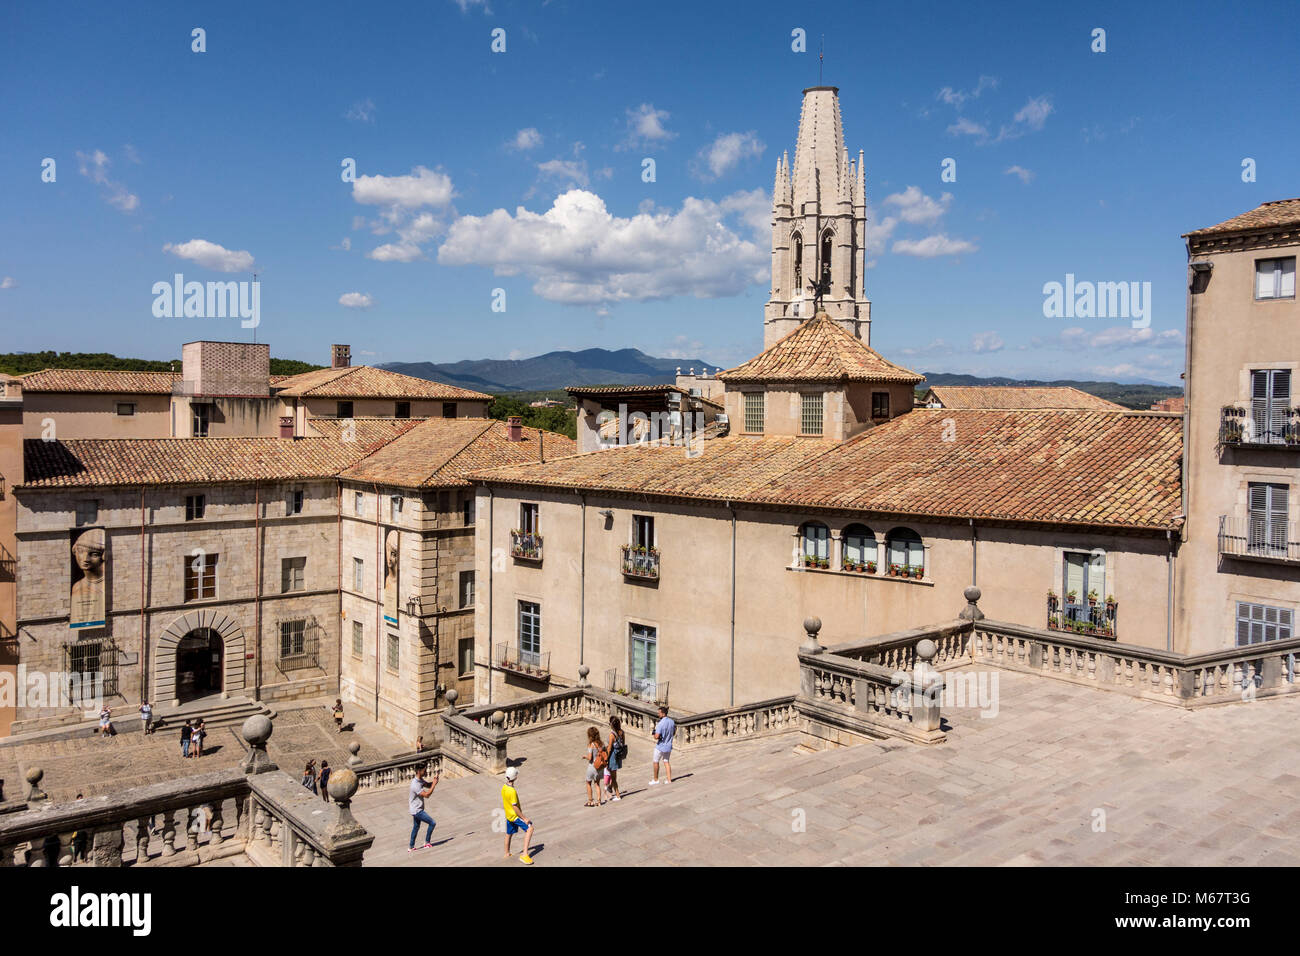 Old Town of Girona's skyline with Basilica de Saint Feliu in the background, Catalonia, Spain Stock Photo